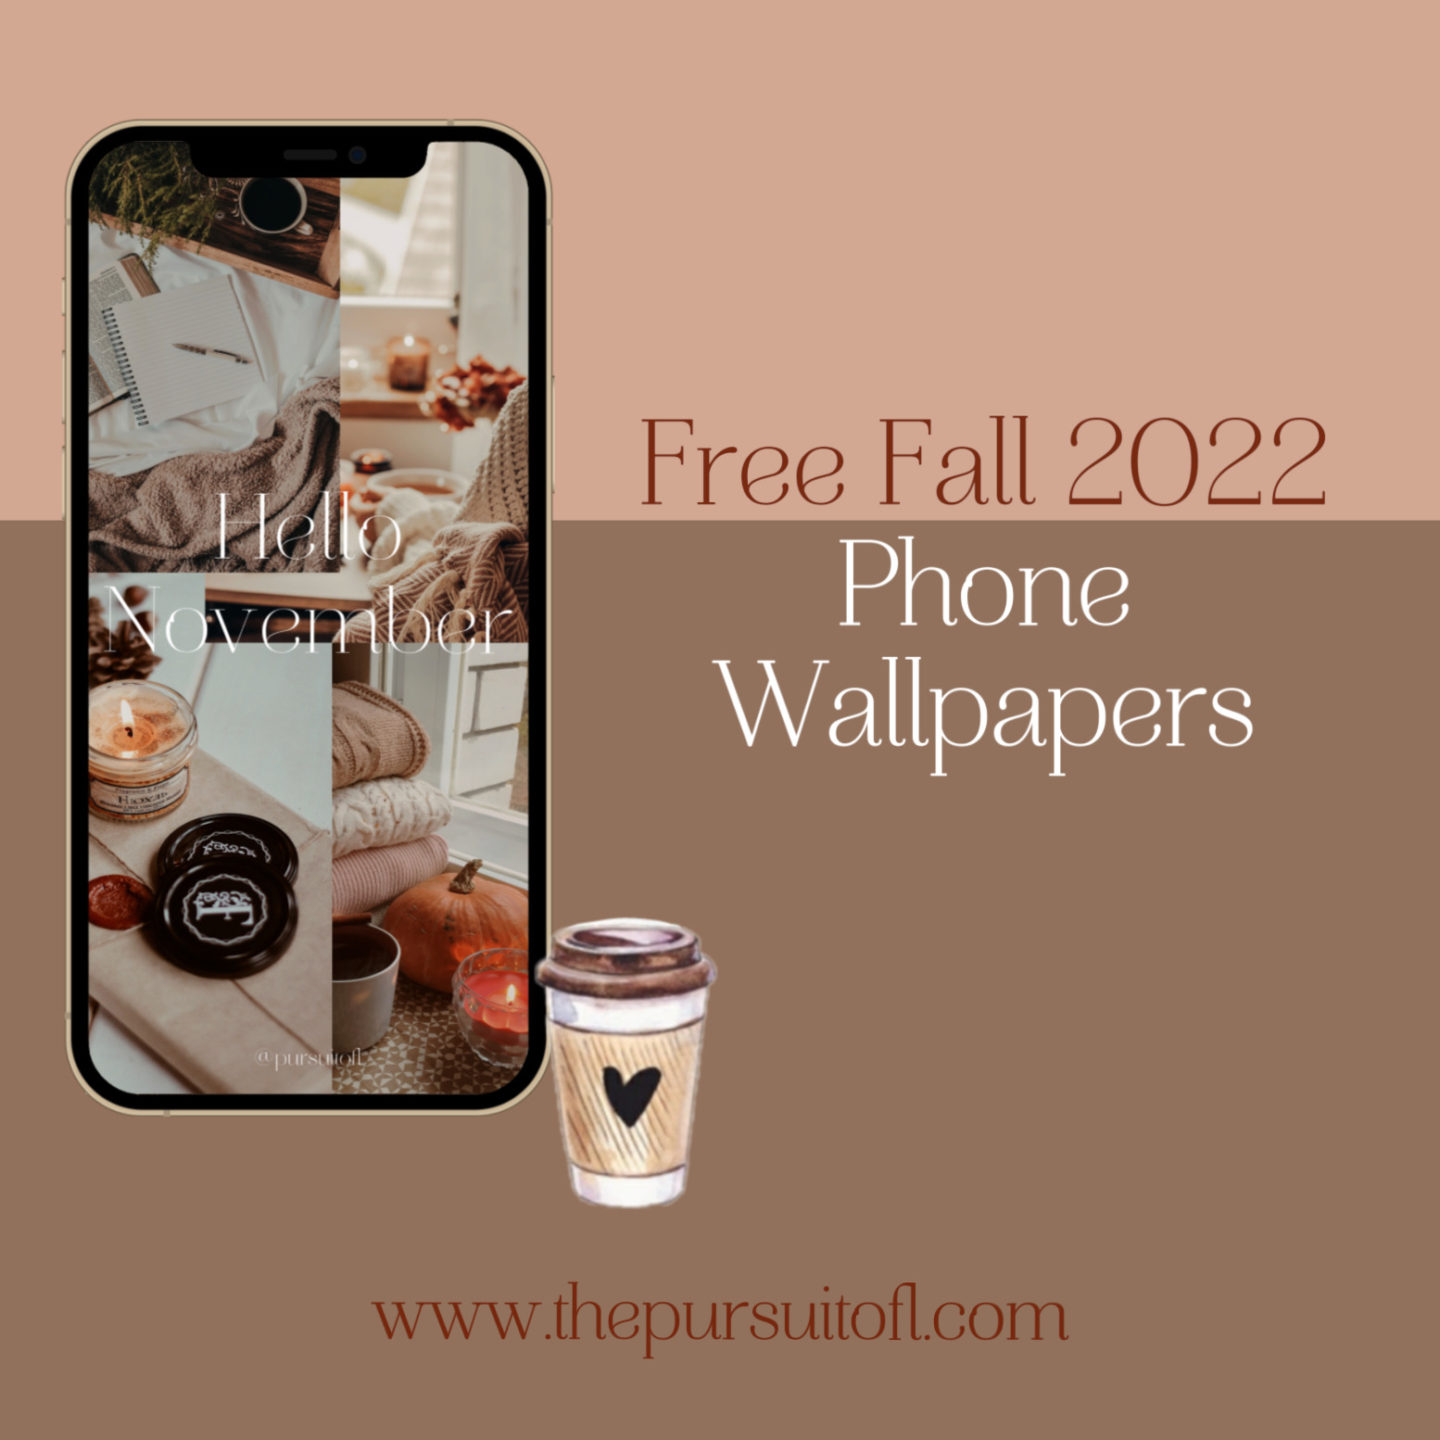 Free Fall 2022 Phone Wallpapers, November 2022